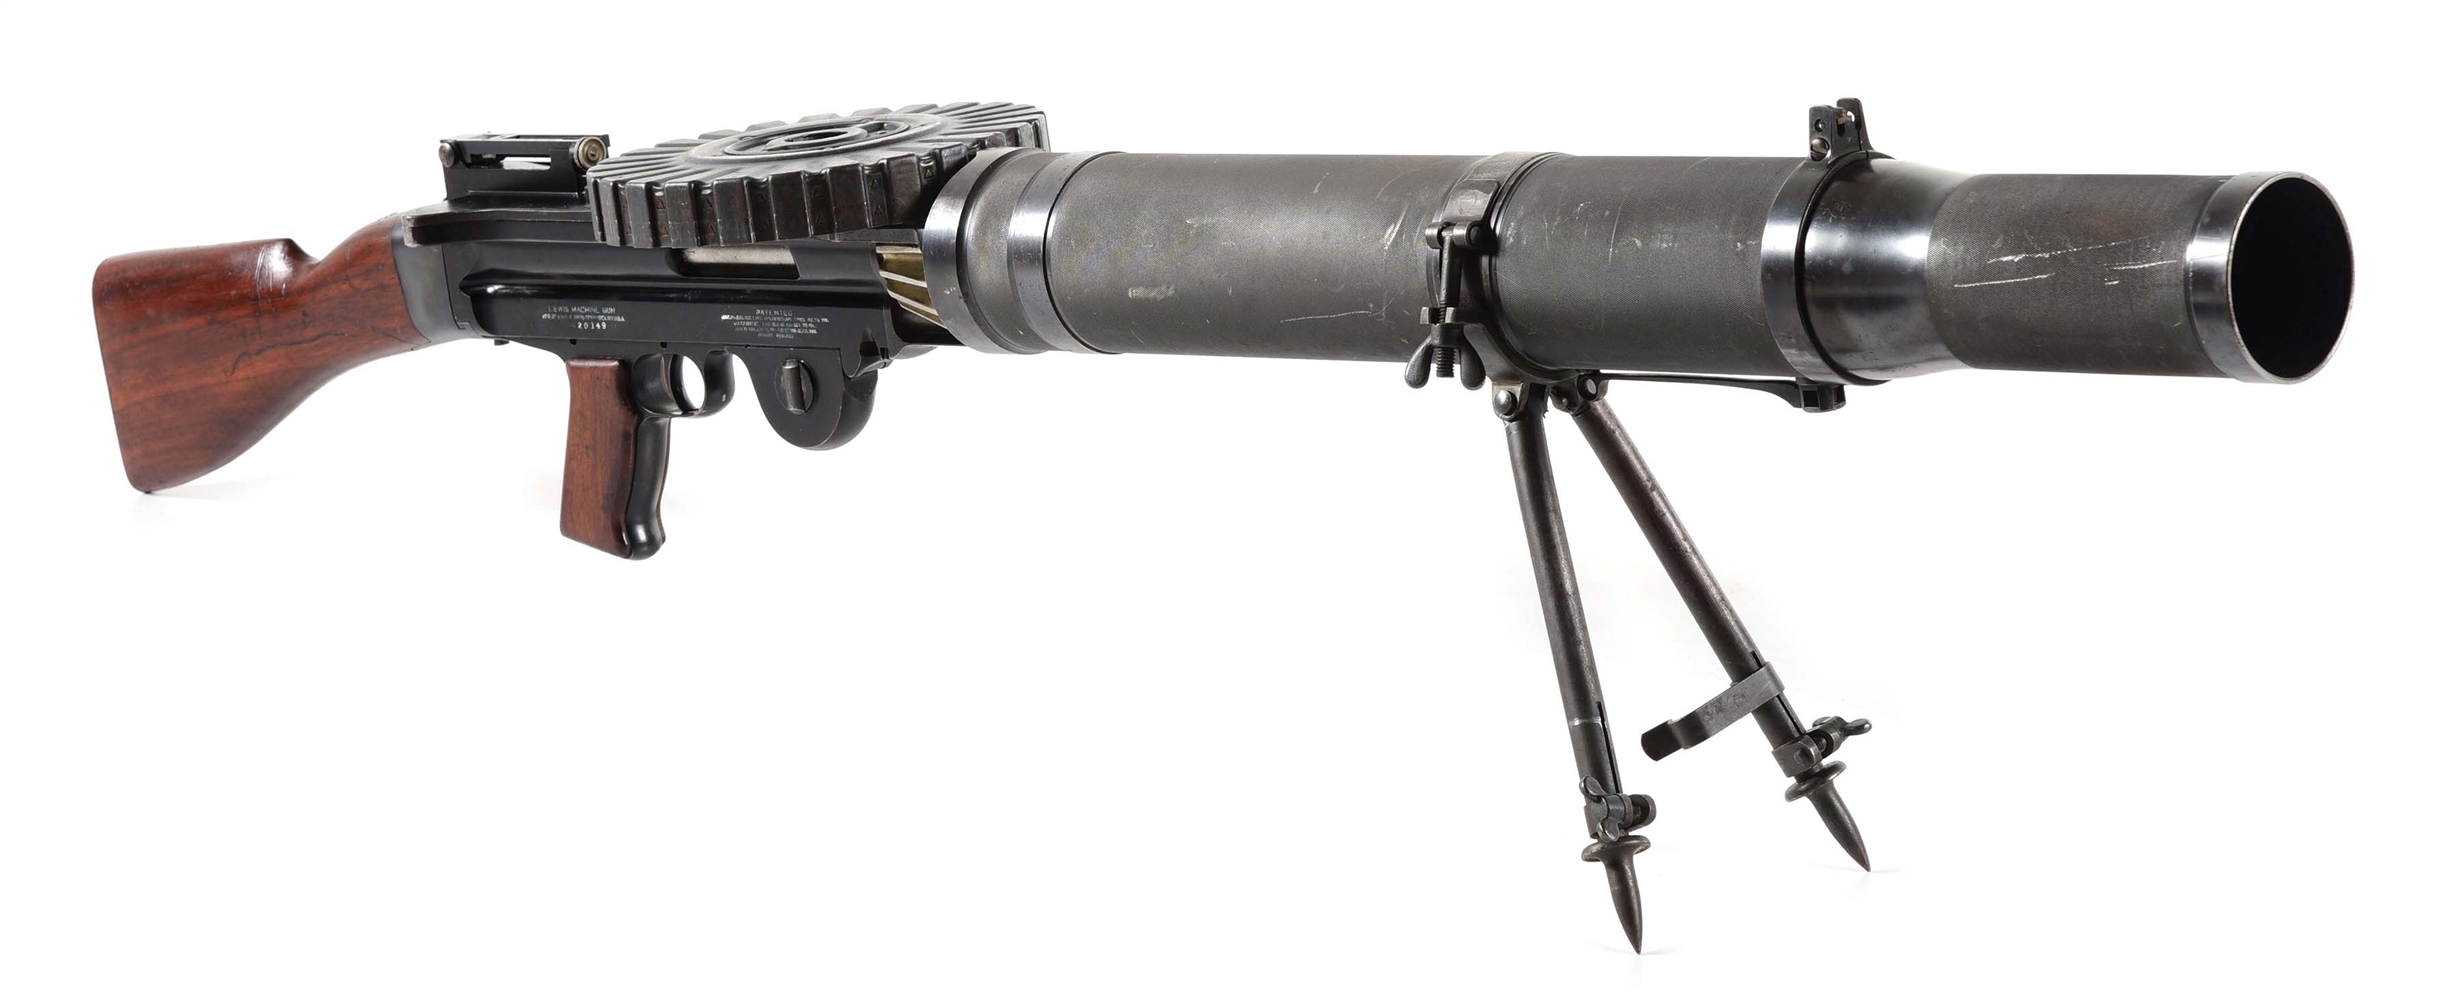 (N) SUPERB SAVAGE LEWIS MODEL 1917 MACHINE GUN IN .30-06 (CURIO AND RELIC).